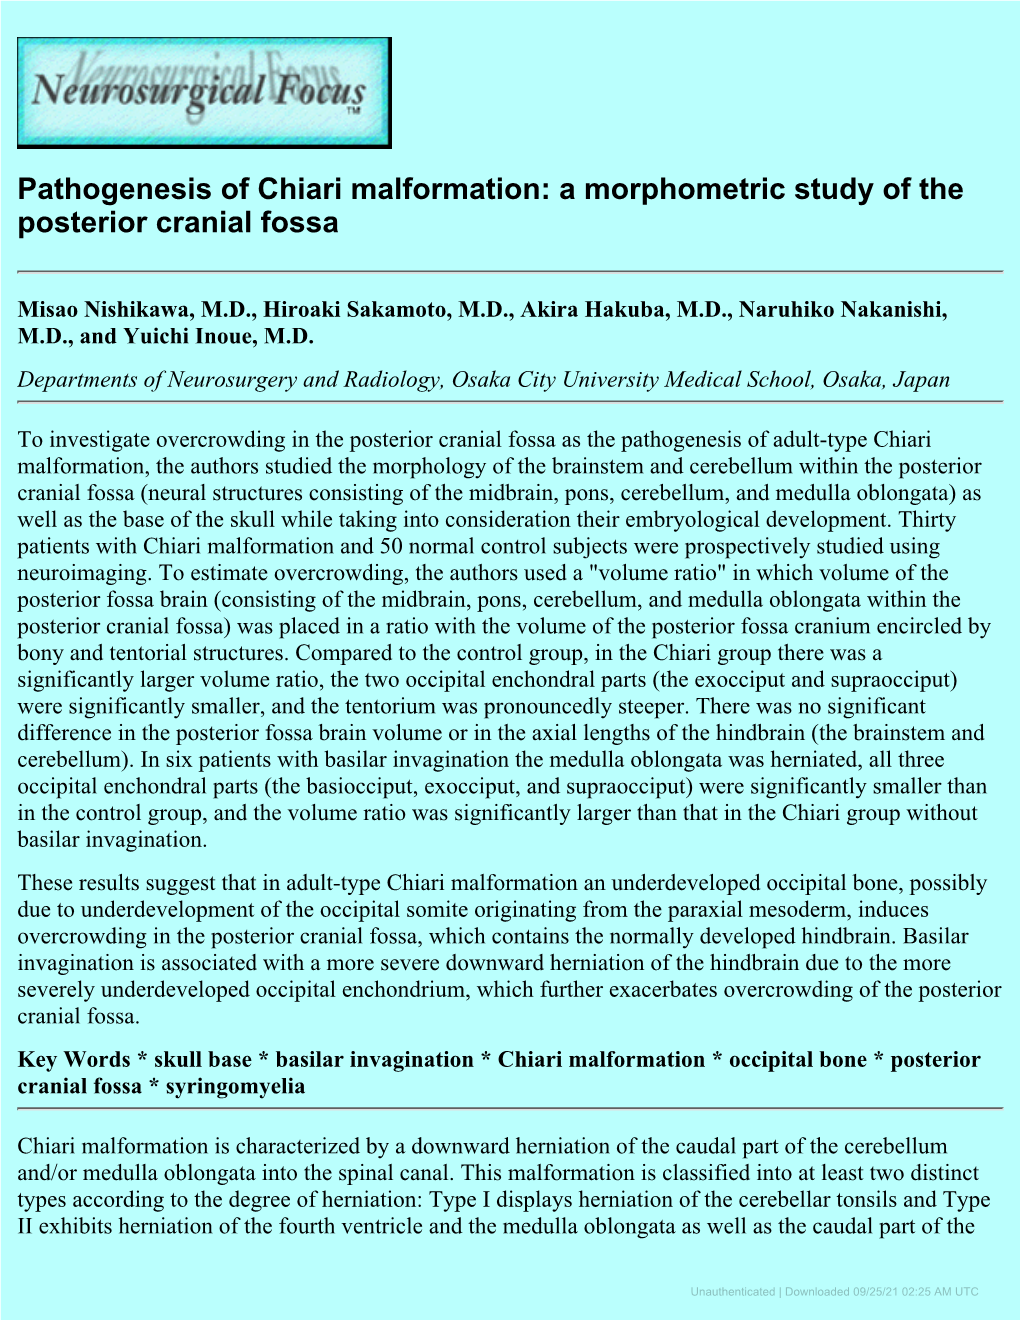 Pathogenesis of Chiari Malformation: a Morphometric Study of the Posterior Cranial Fossa